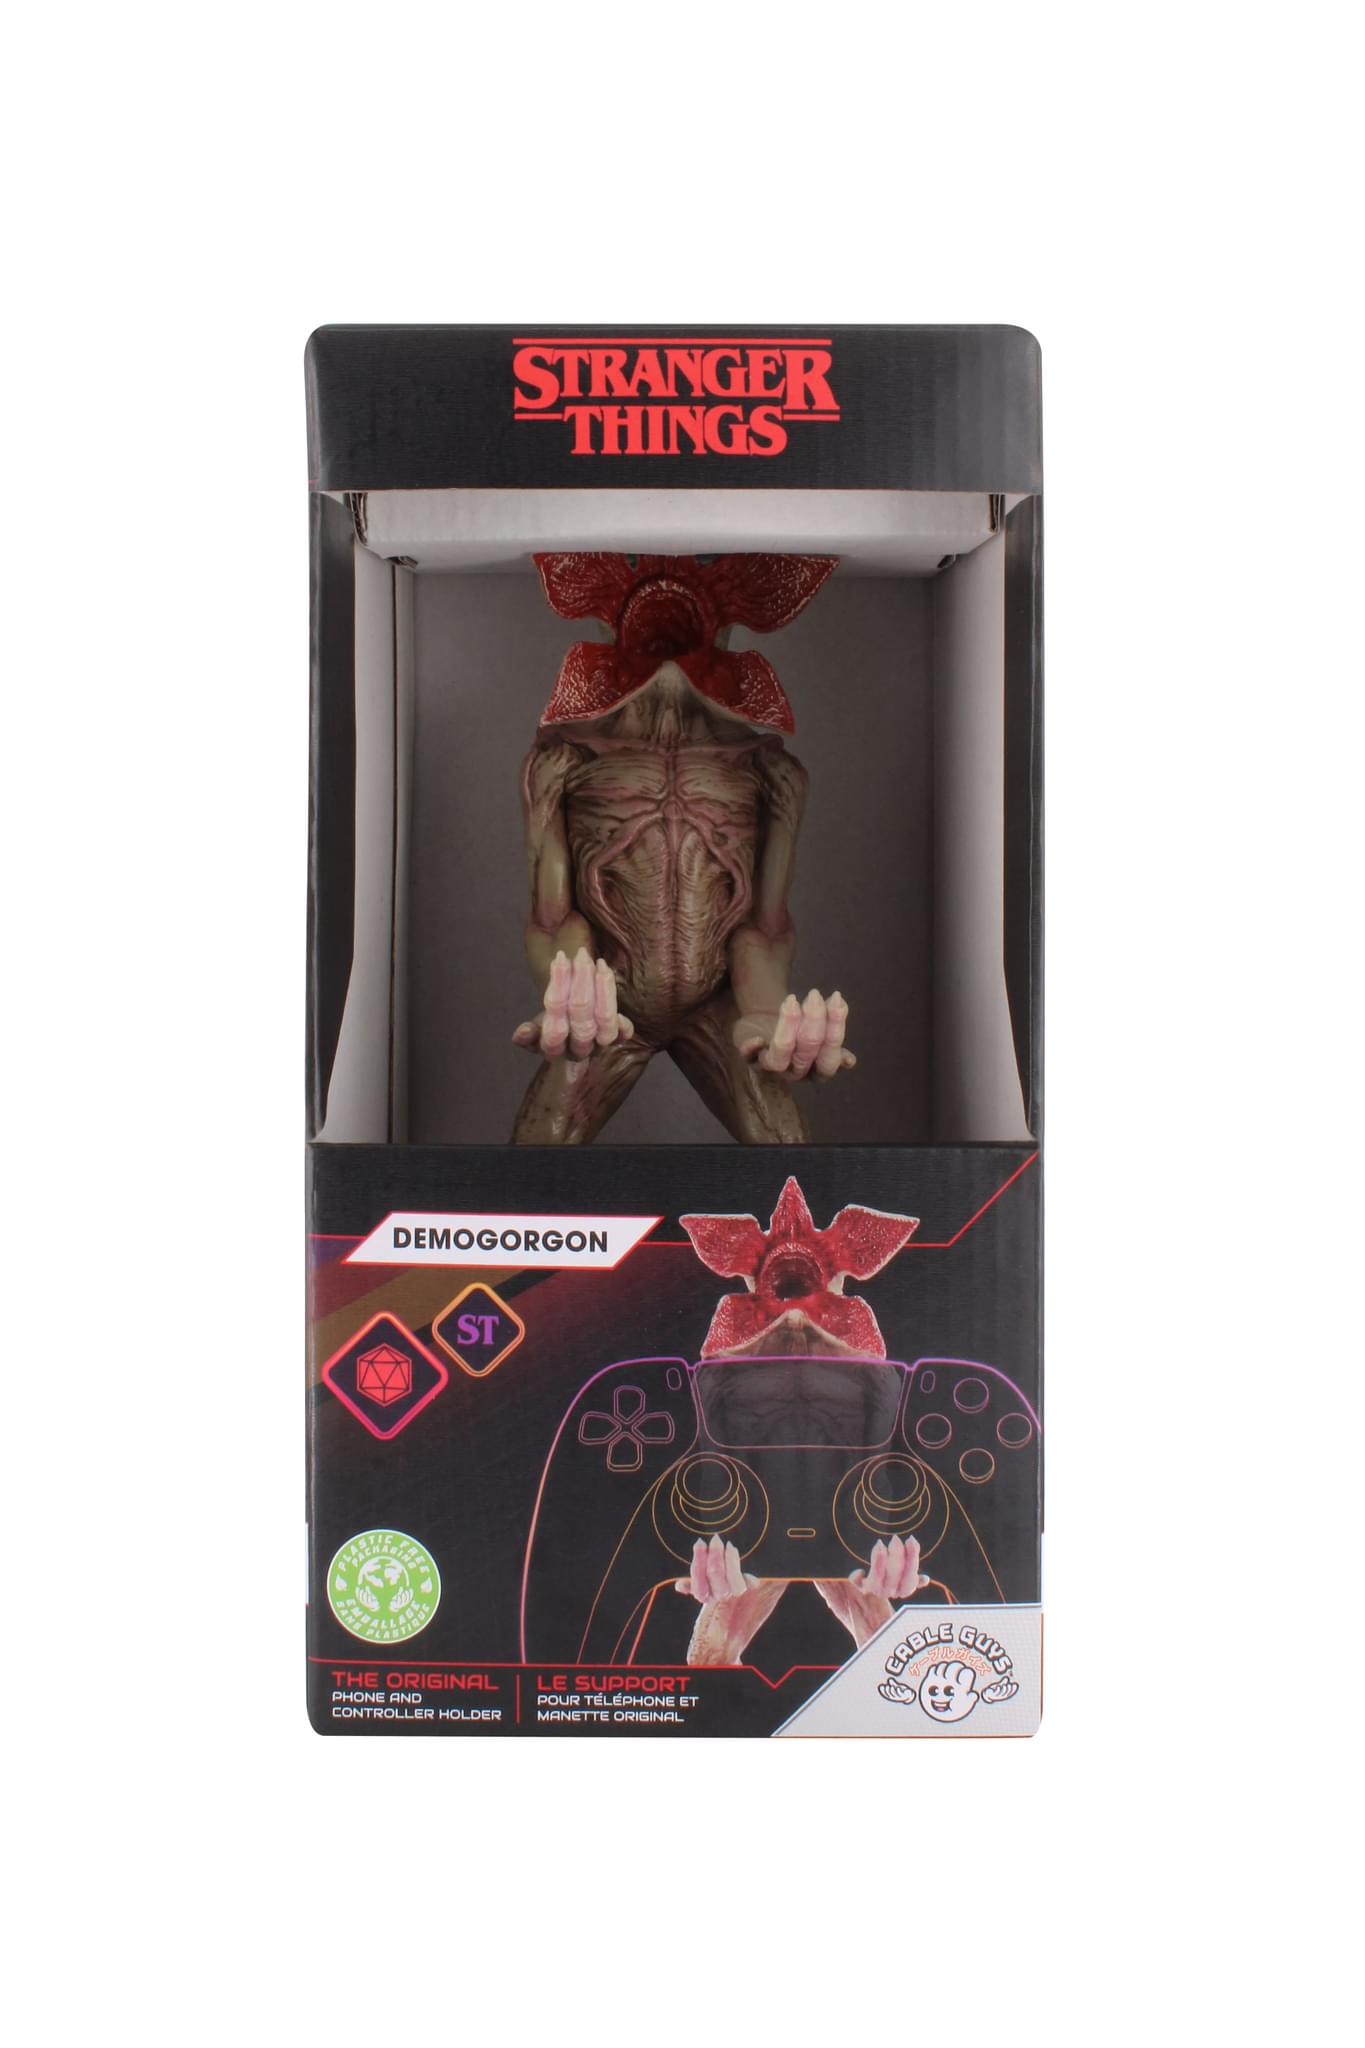 Stranger Things: Demogorgon Cable Guys Original Controller and Phone Holder - EXG Pro